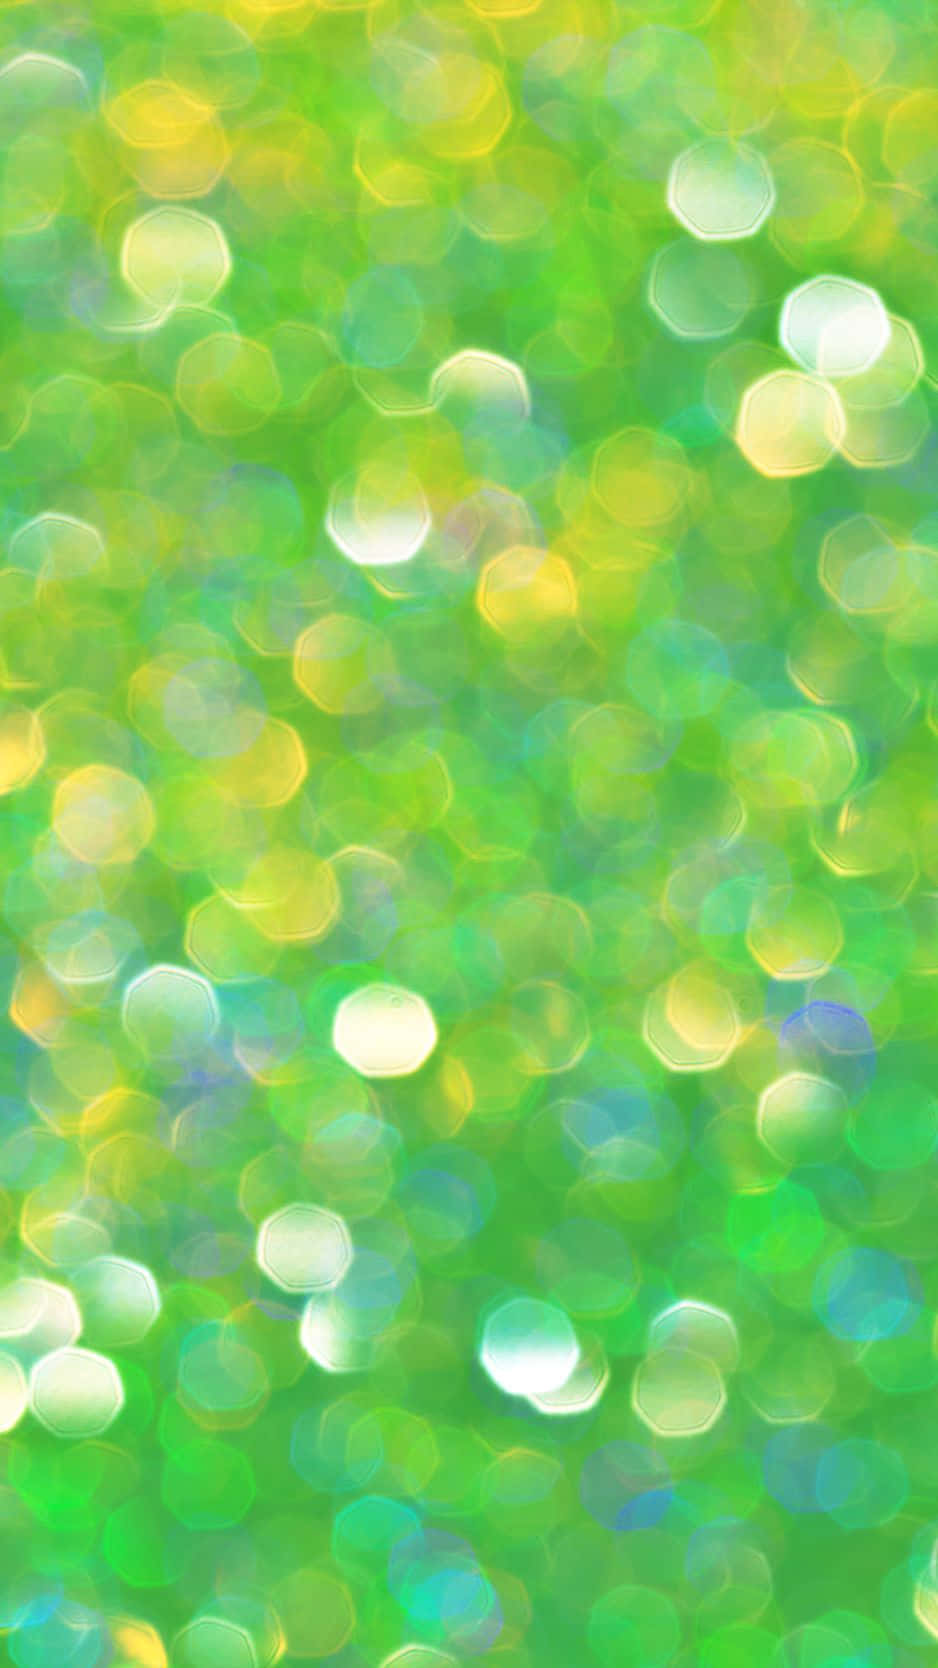 Green Sparkle Background